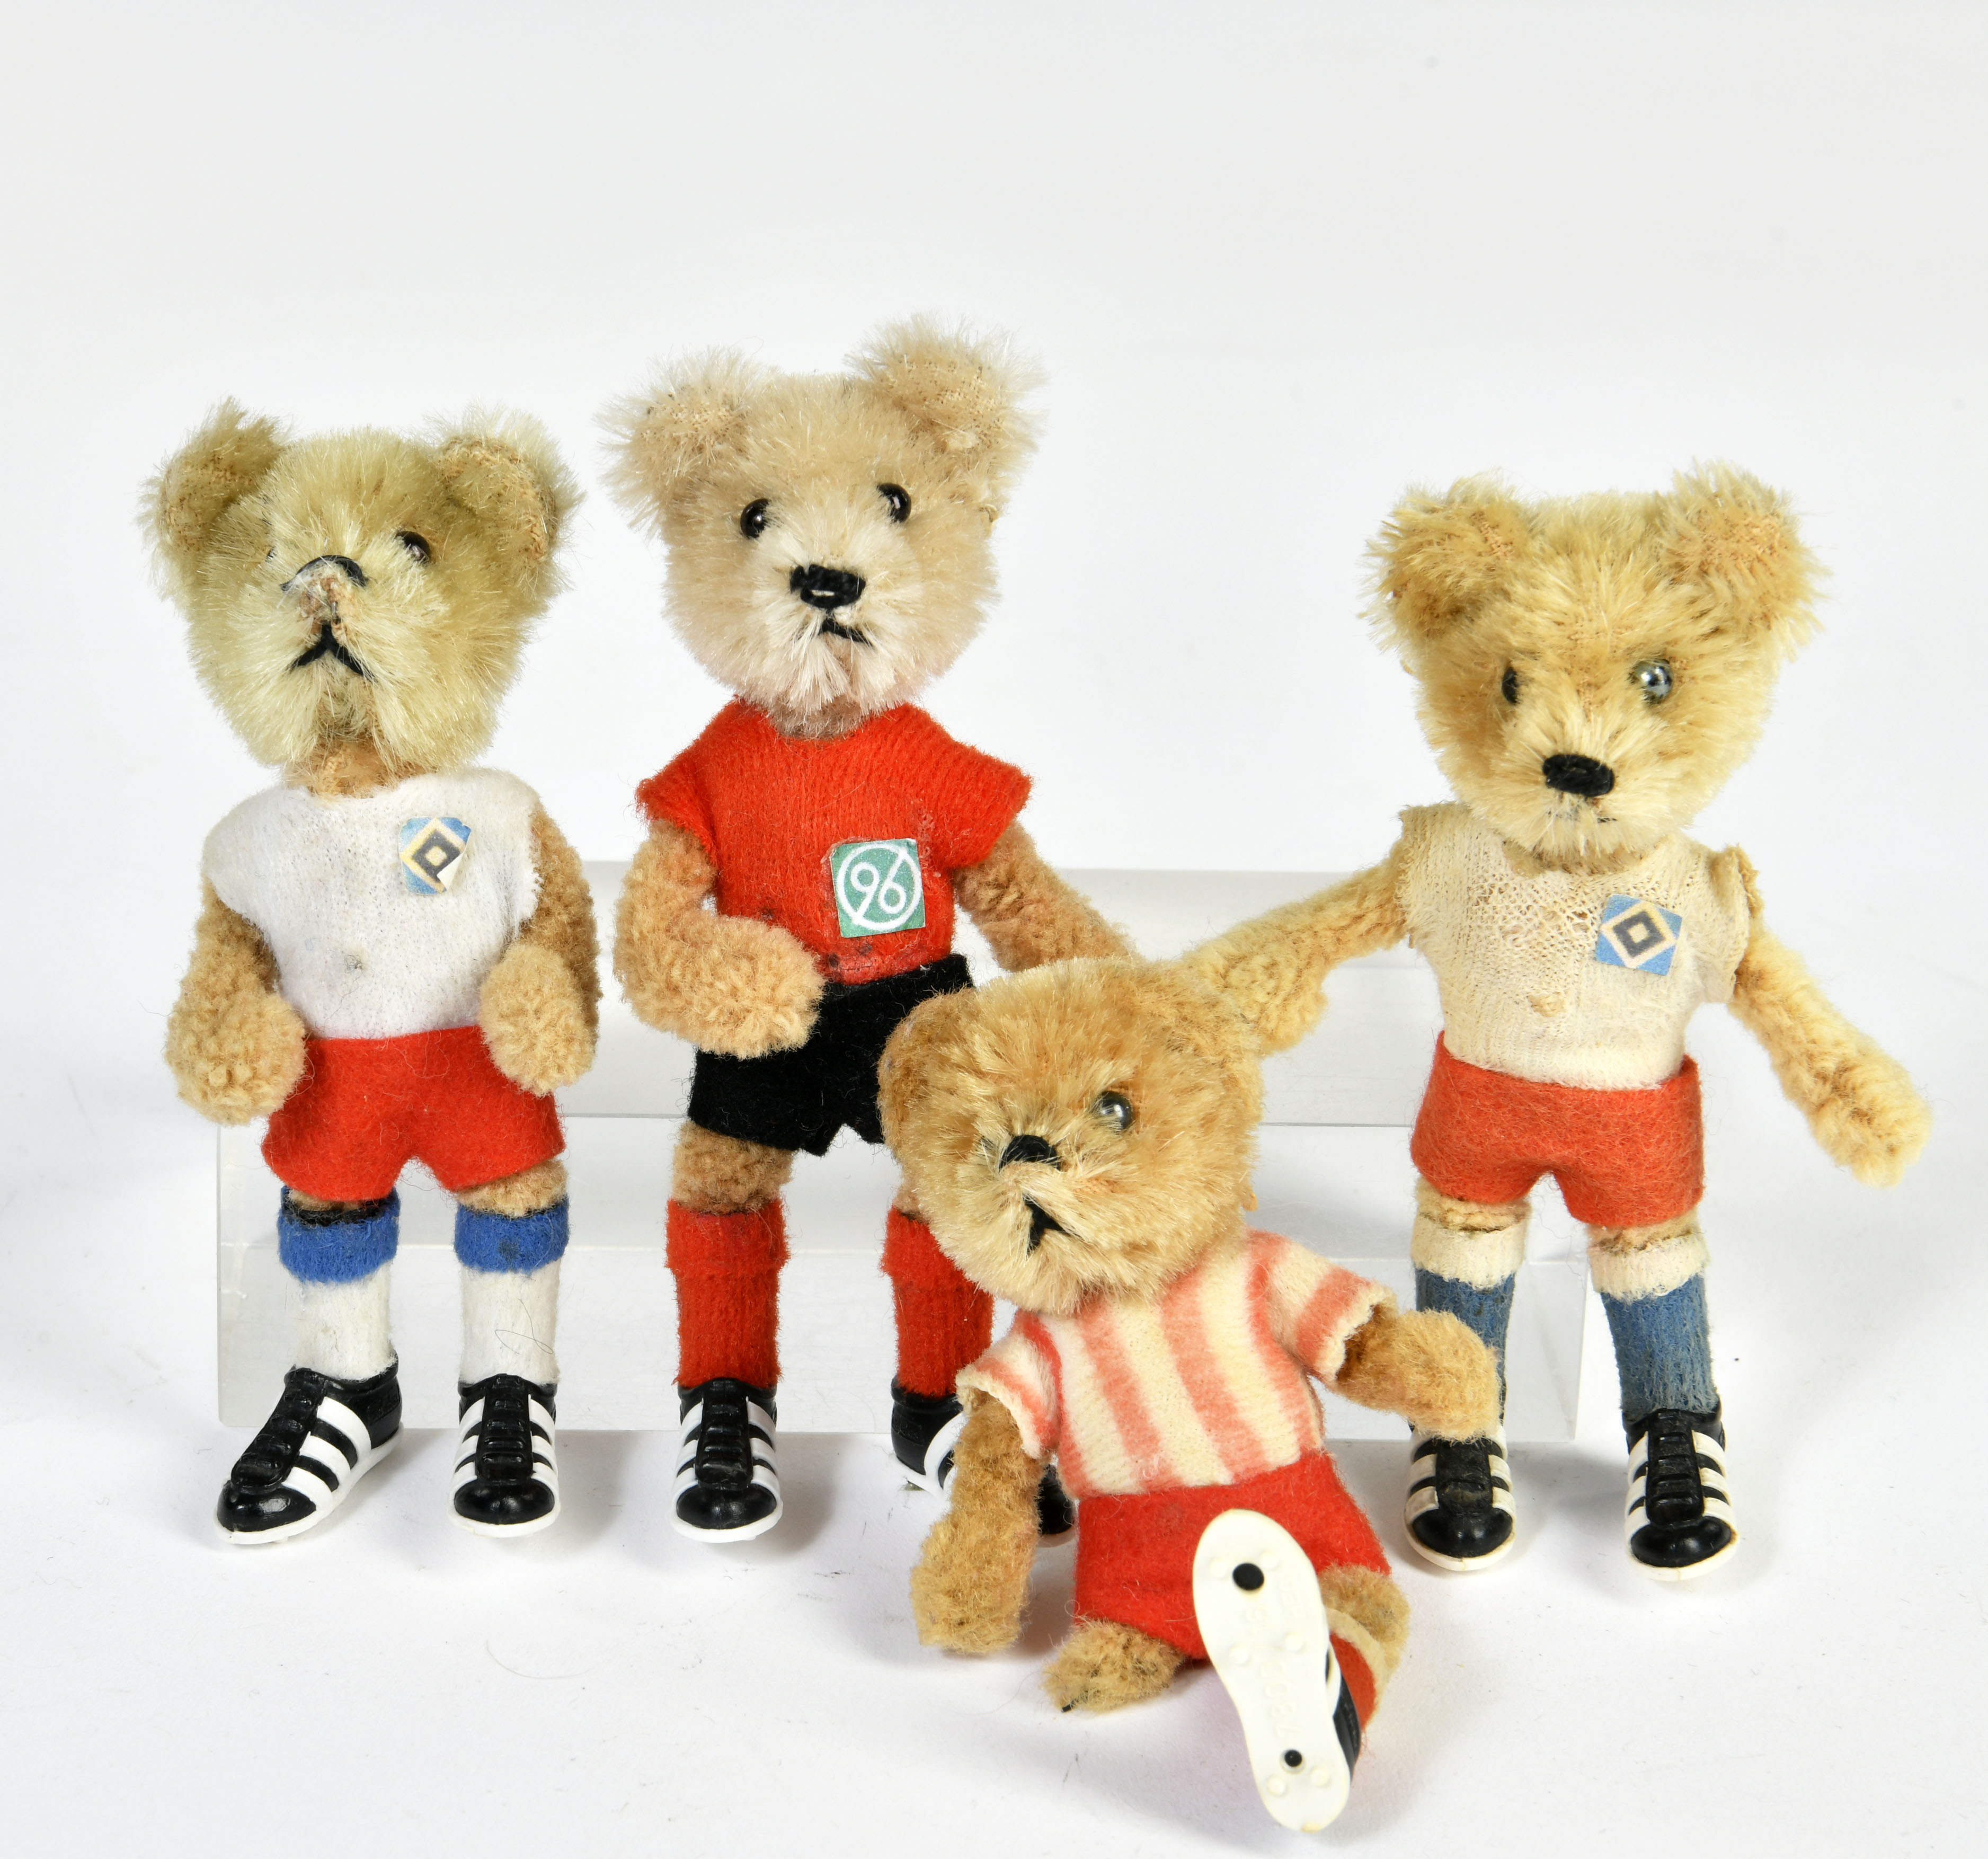 Schuco, Hegi, 4 scoccer bears, Germany, 60s, 1x damaged, otherwise C 2